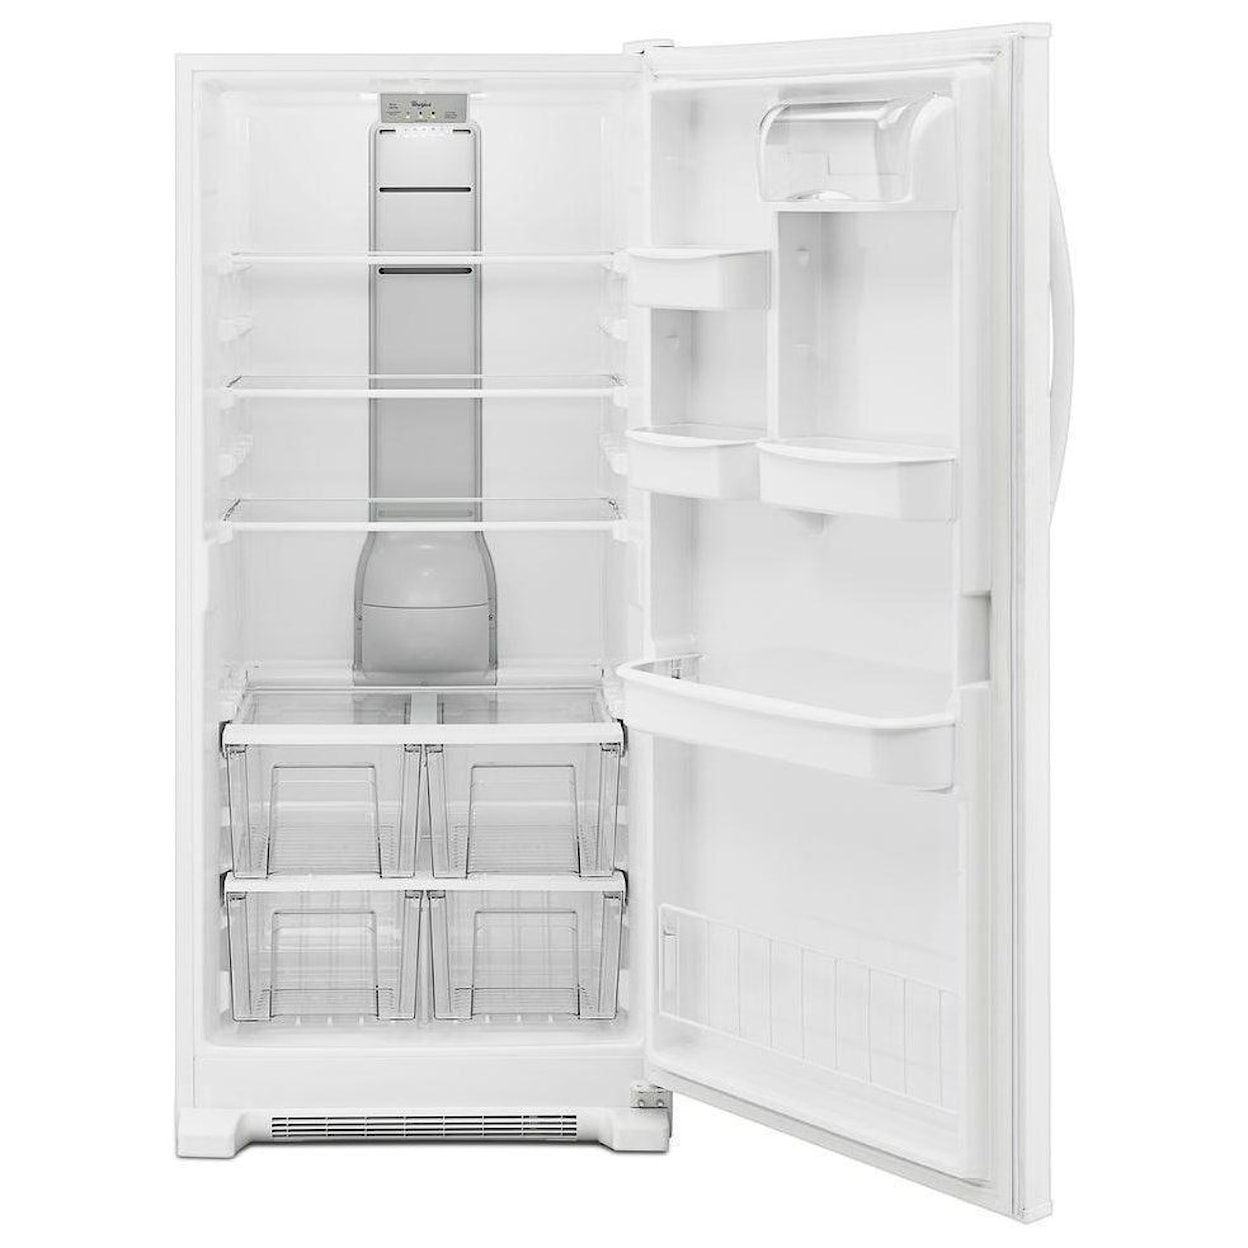 Whirlpool All Refrigerators 31" Refrigerator with 18 Cu. Ft.  Capacity